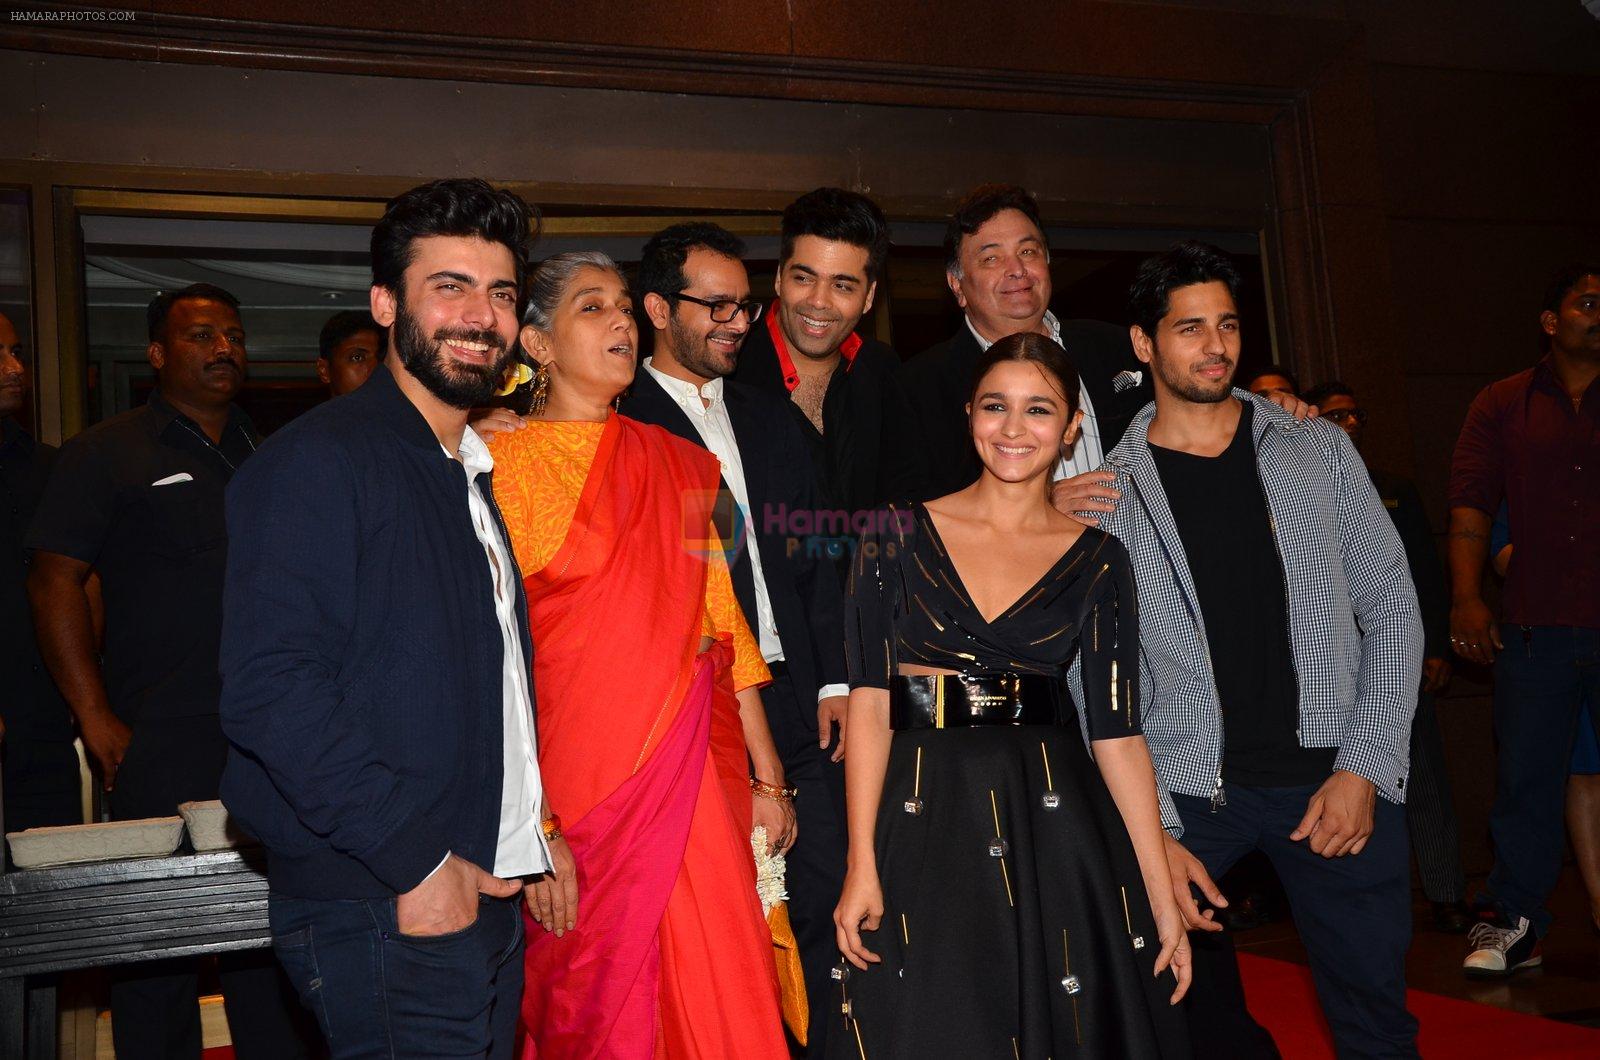 Alia Bhatt, Fawad Khan, Ratna Pathak Shah, Rishi Kapoor, Sidharth Malhotra, Karan Johar, Shakun Batra at Kapoor n Sons success bash on 3rd April 2016